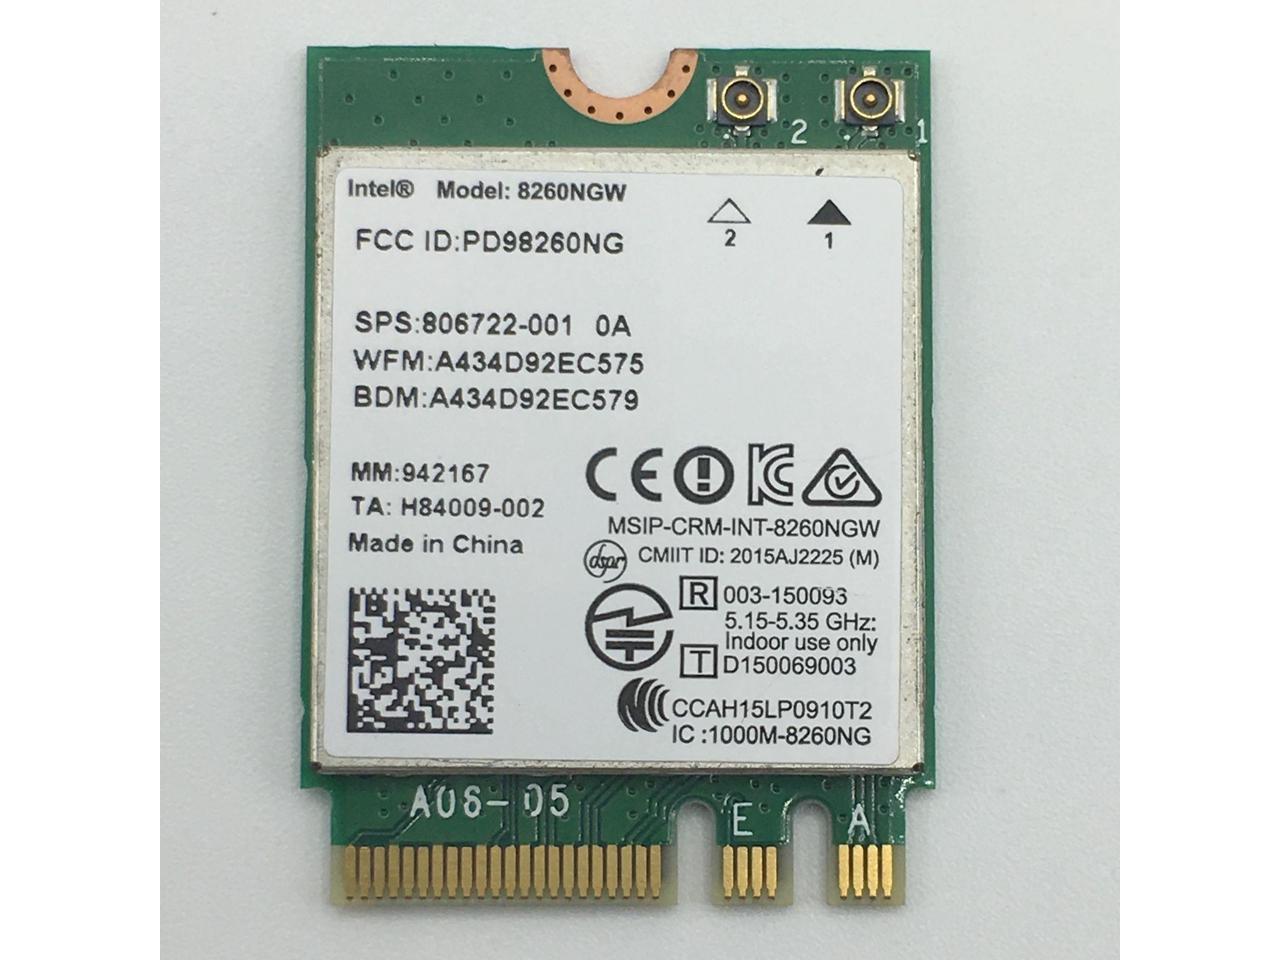 RCC Dual Band Wireless AC 8260 8260AC NGFF WiFi Card USE for Intel 8260 AC AC8260 8260NGW M.2 NGFF 2.4/5GHz Bluetooth 4.2 Wireless WiFi Card 867 Mbps 